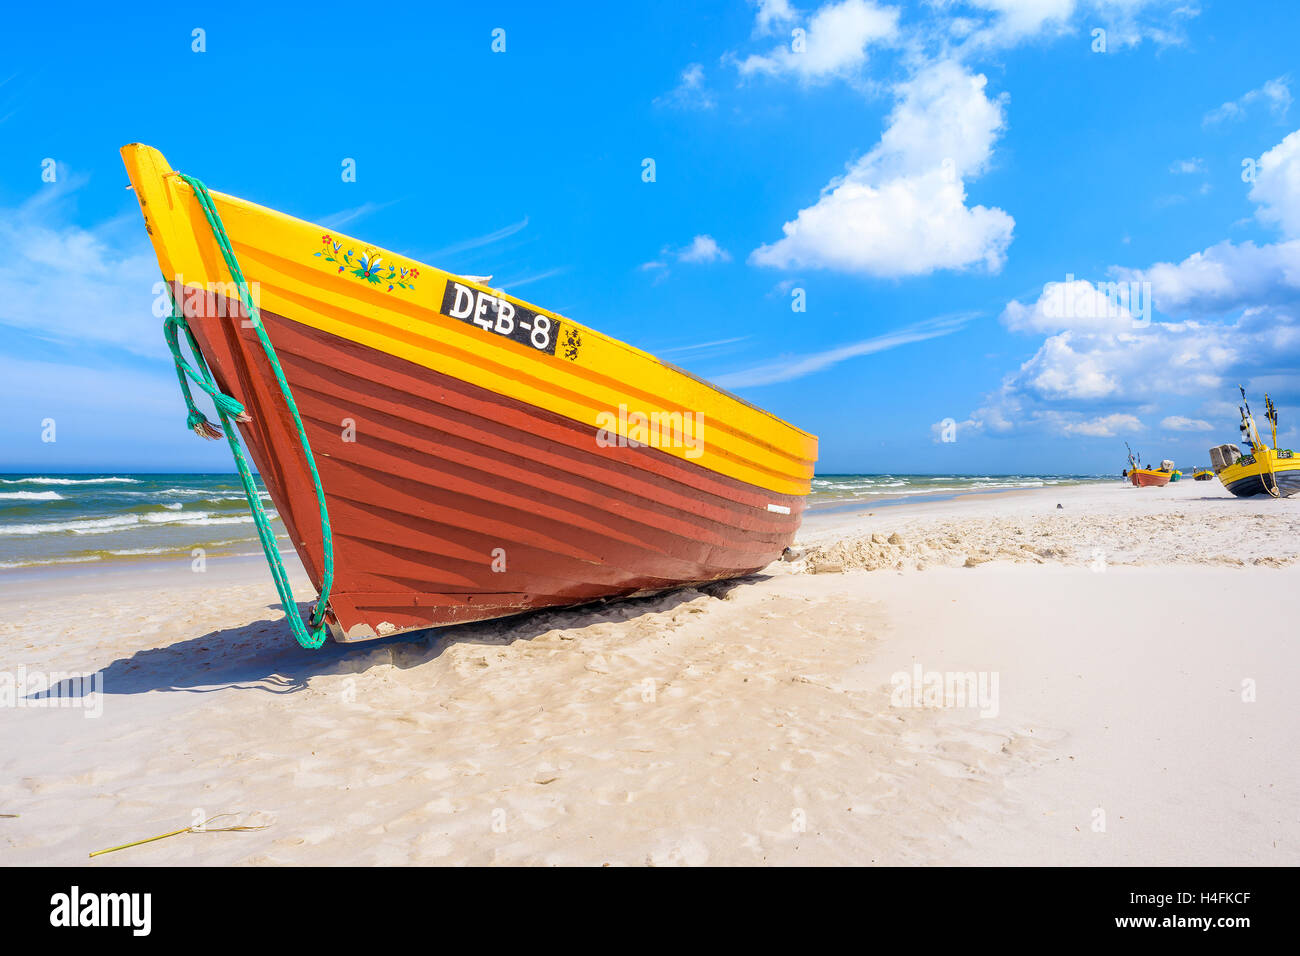 BALTIC SEA BEACH, POLAND - JUN 18, 2016: Colorful fishing boat on sandy Debki beach. Poland's coastline has length of 770 km. Stock Photo